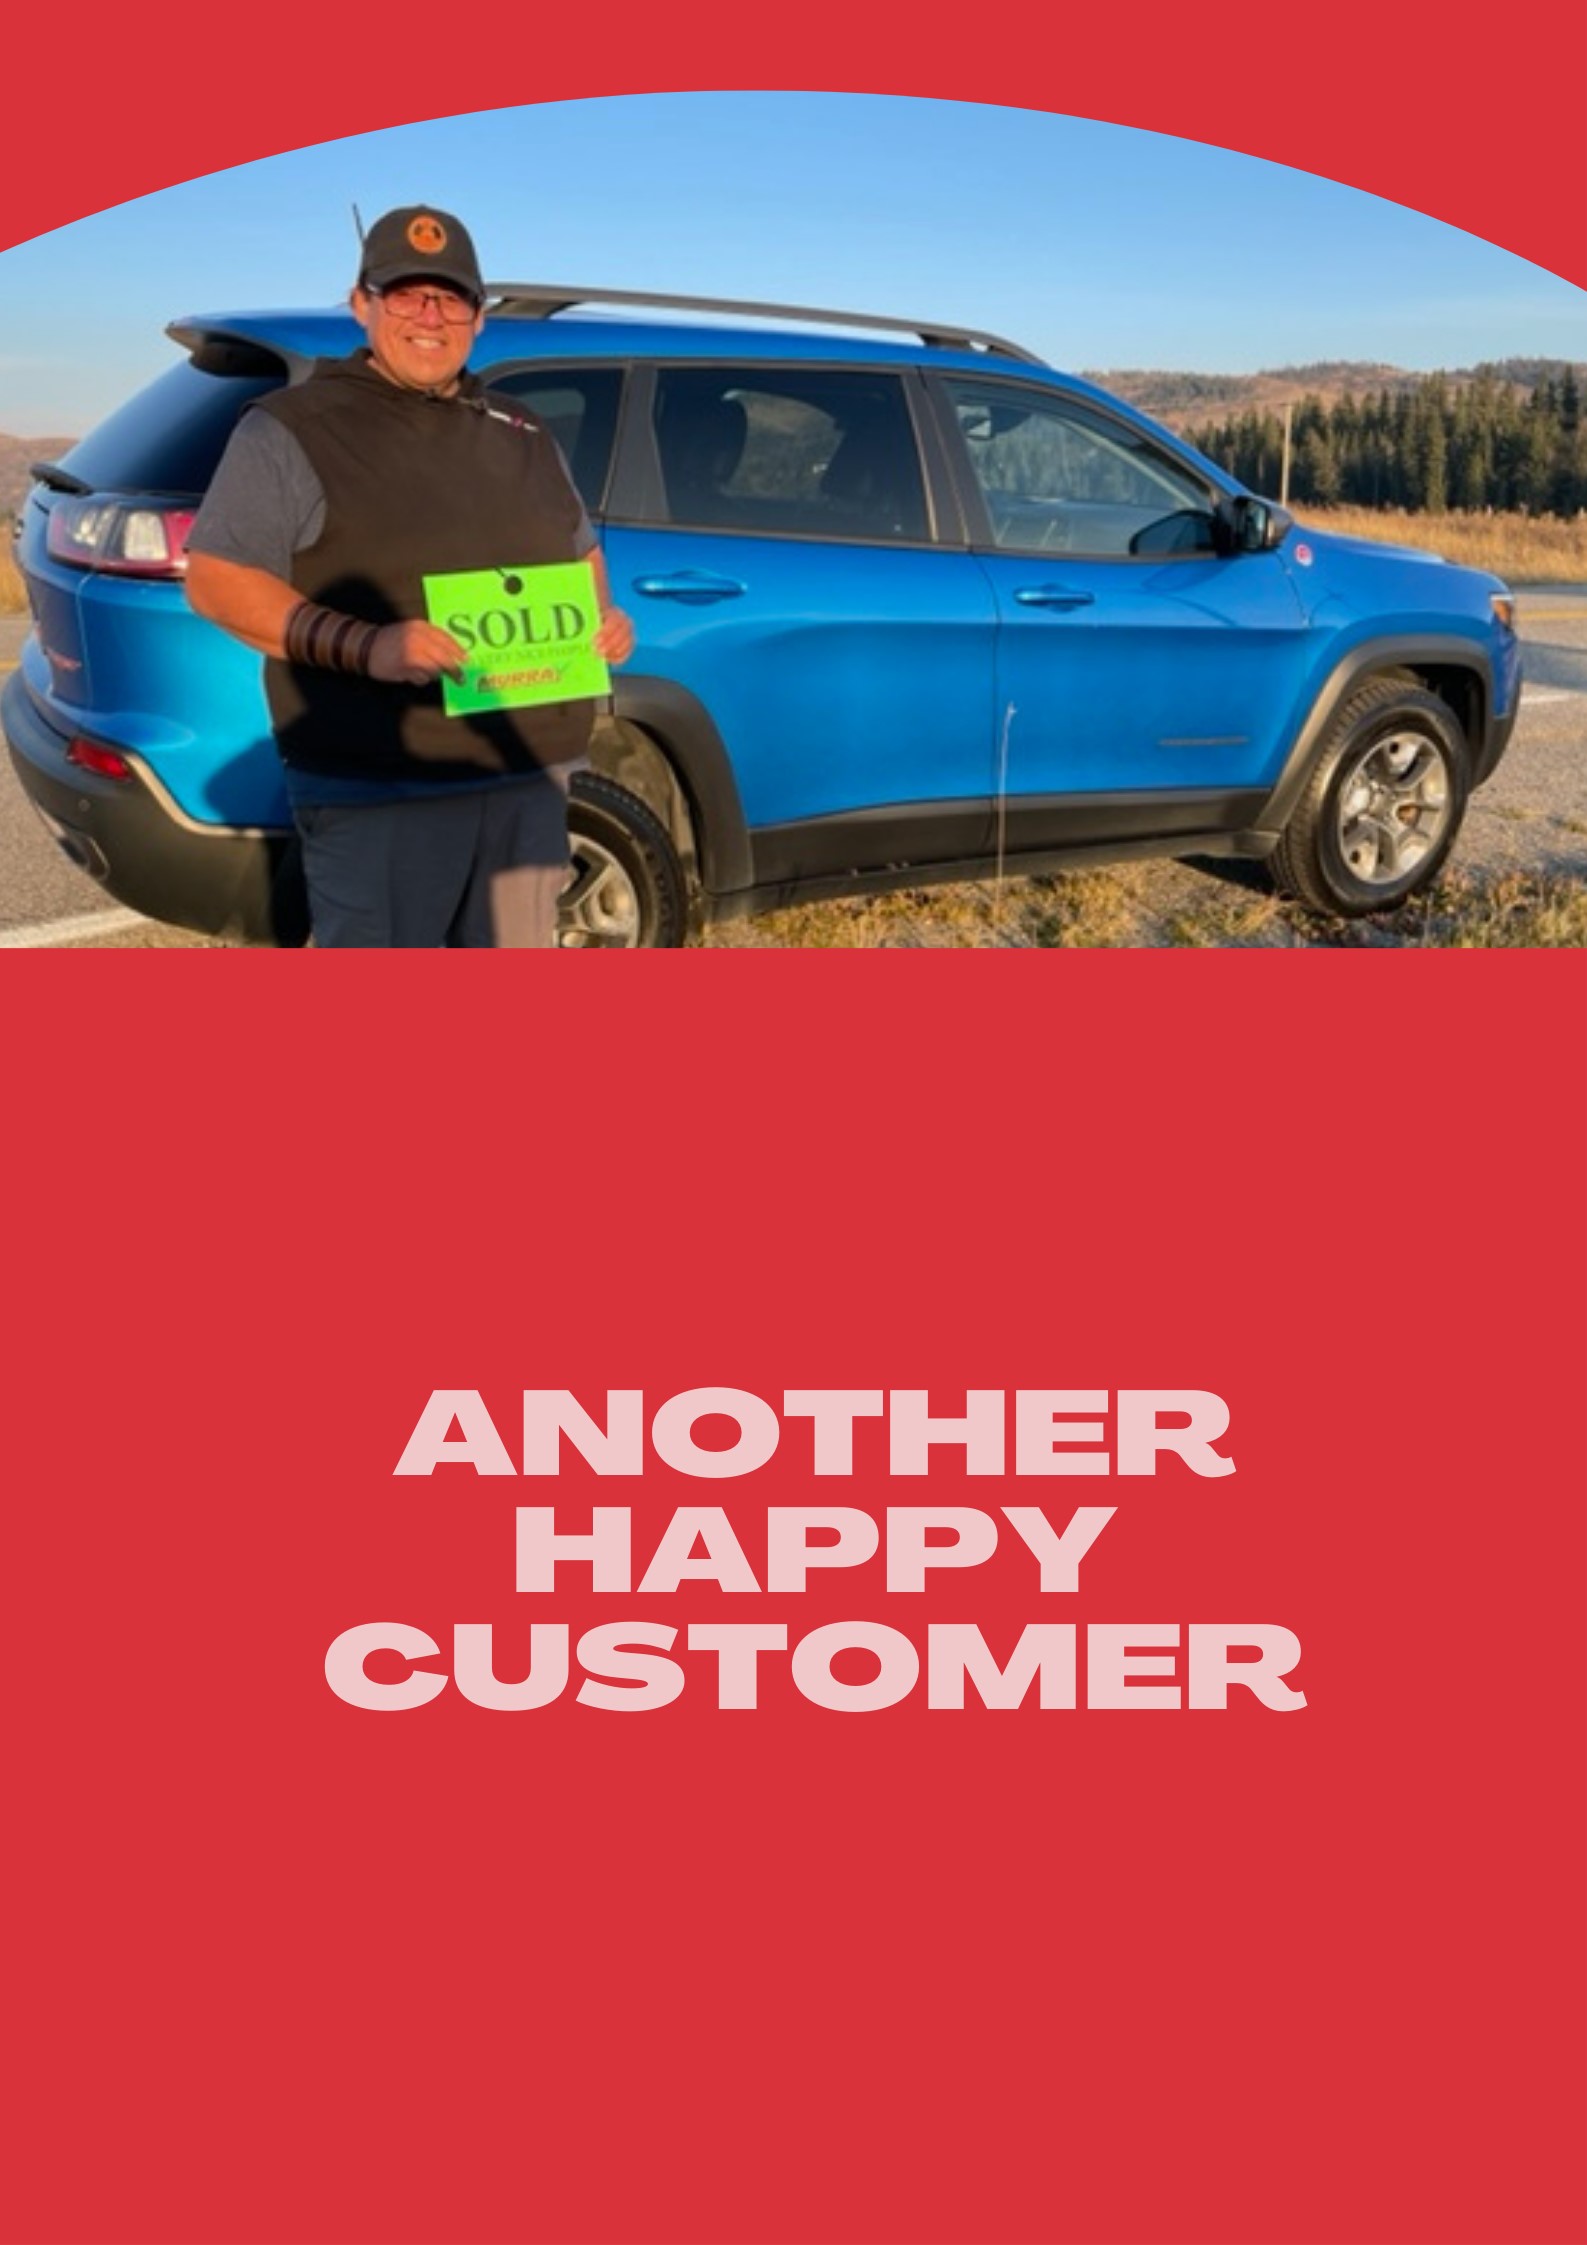 Happy customer